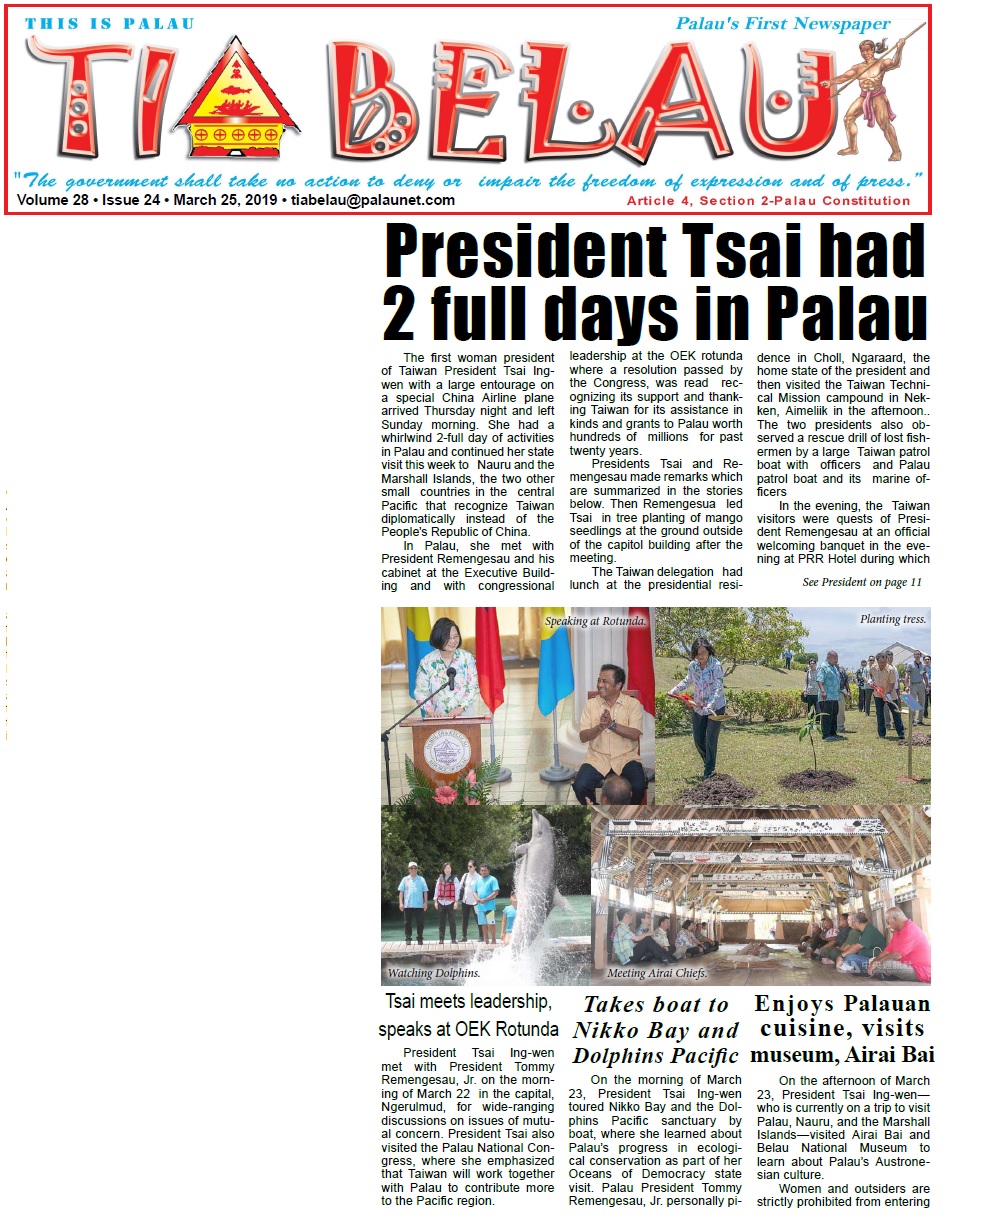 President Tsai had 2 full days in Palau